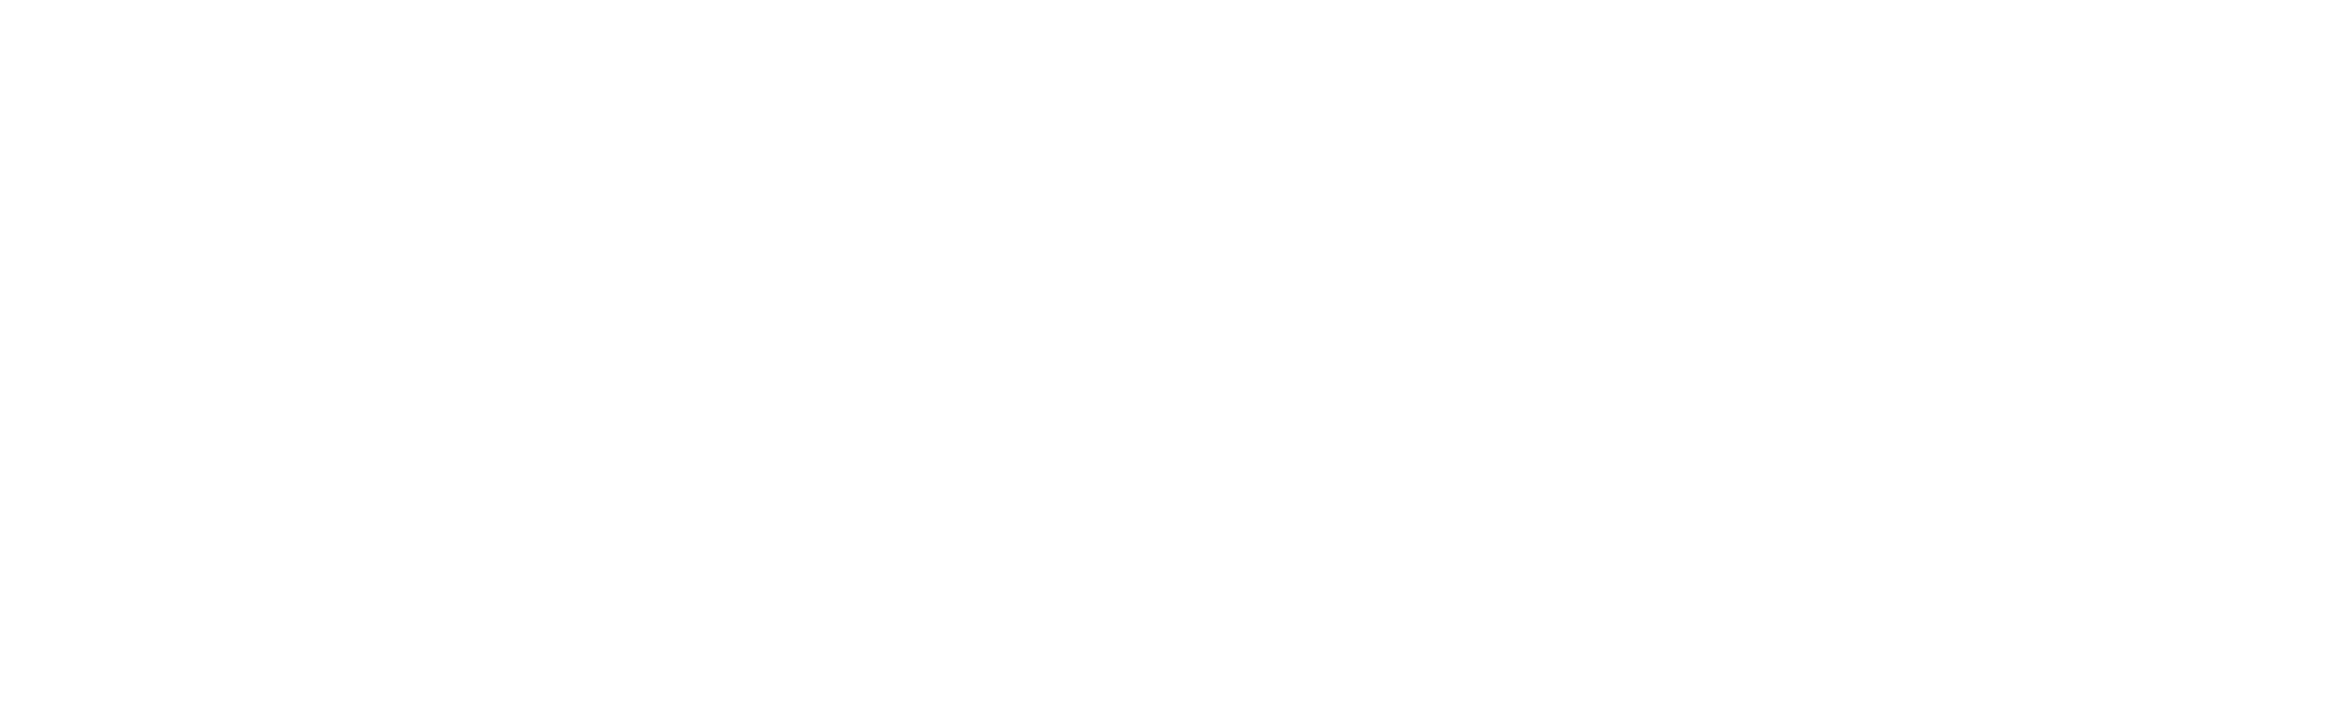 InsurLab_Germany_Logo_white_transparent_300dpi